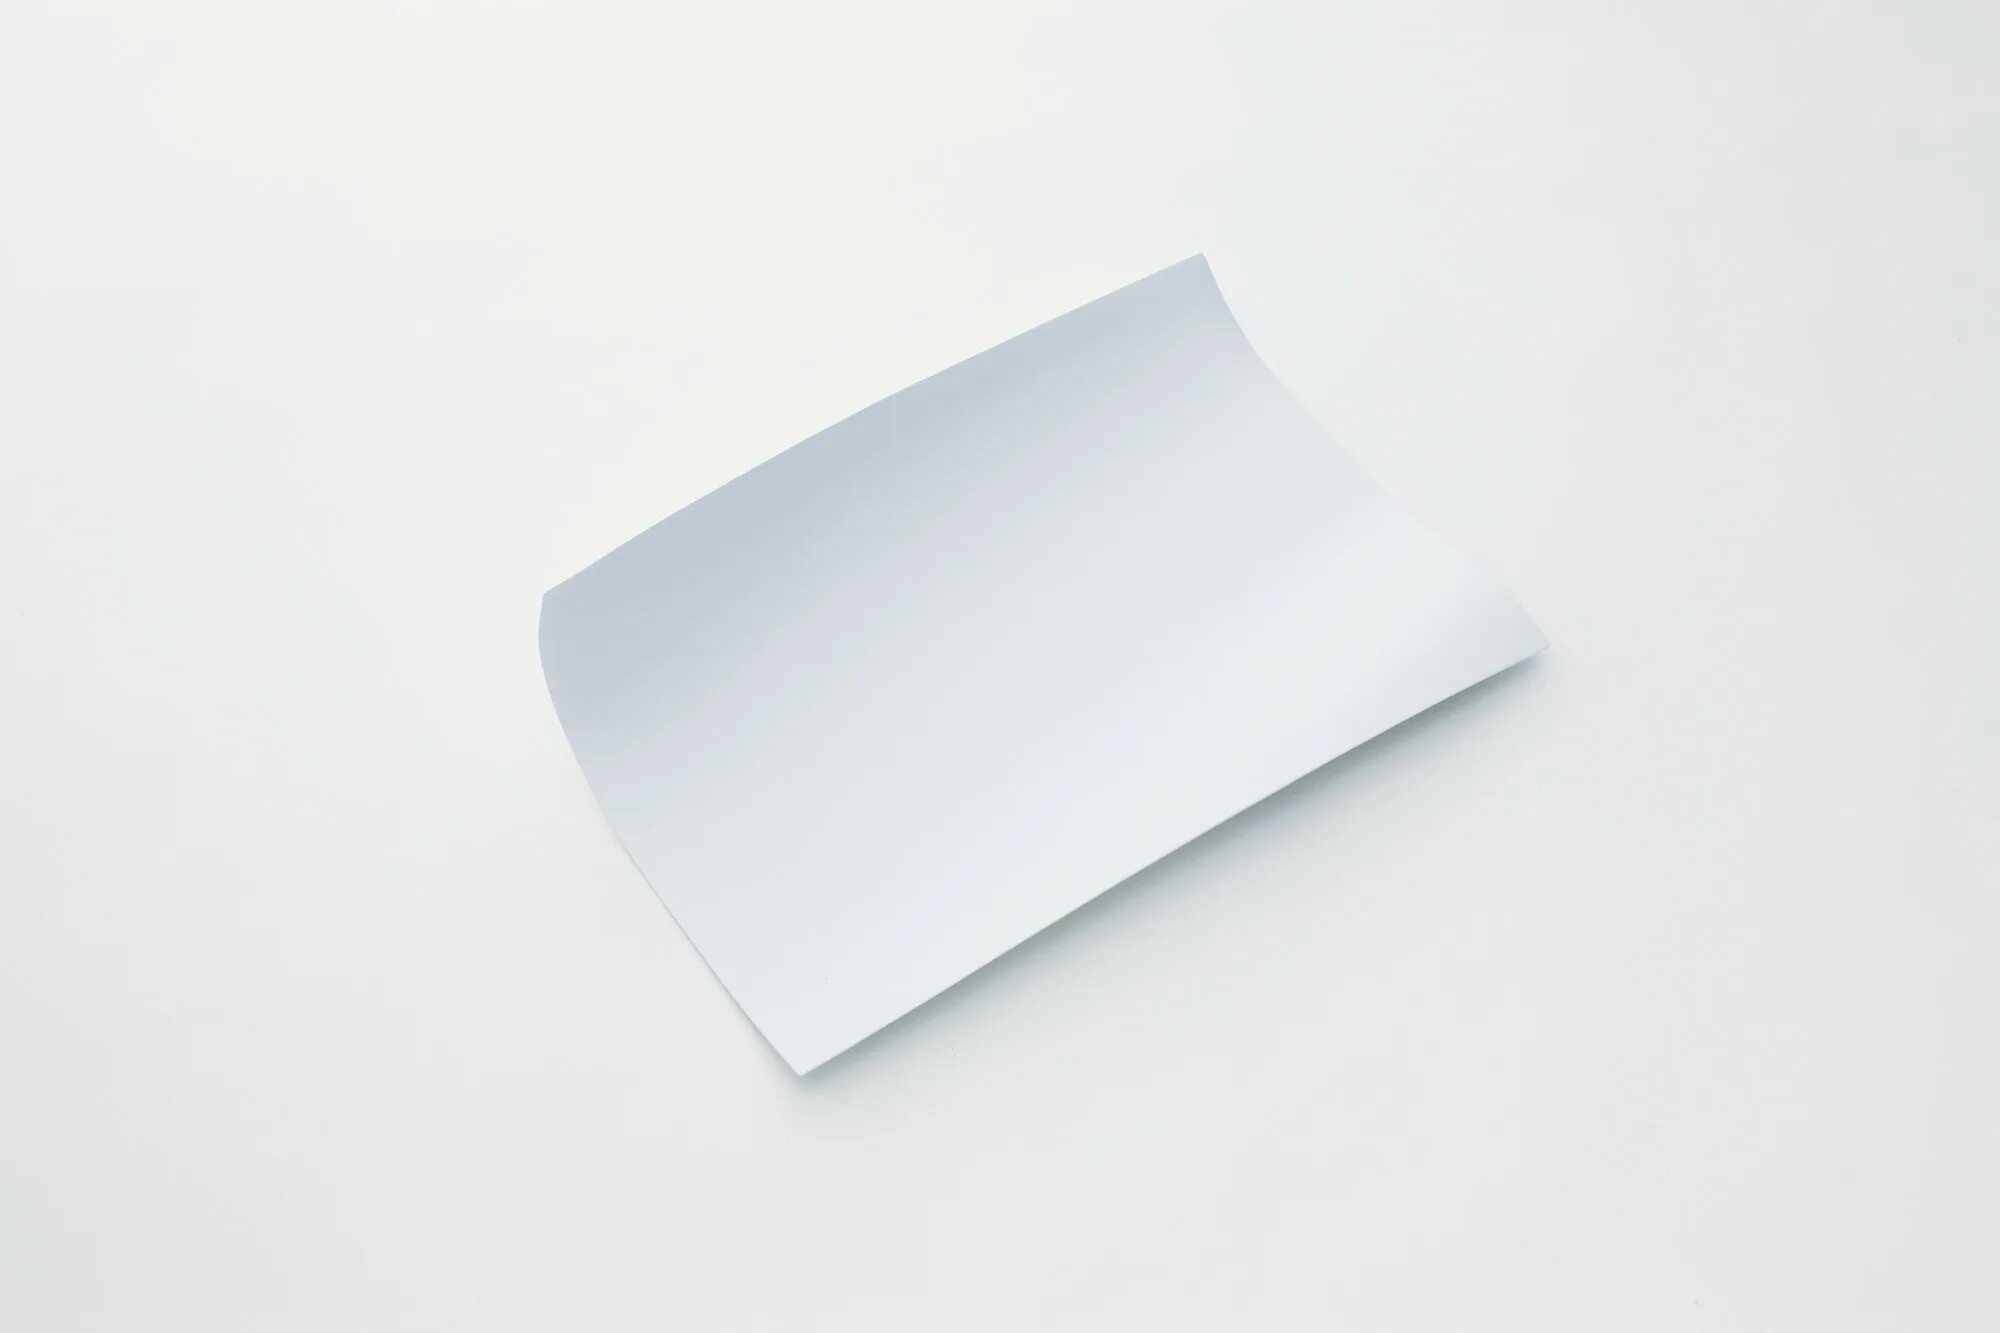 Sheet of paper. Лист бумаги. Белый лист бумаги. Бумажный лист. Лист бумаги на белом фоне.